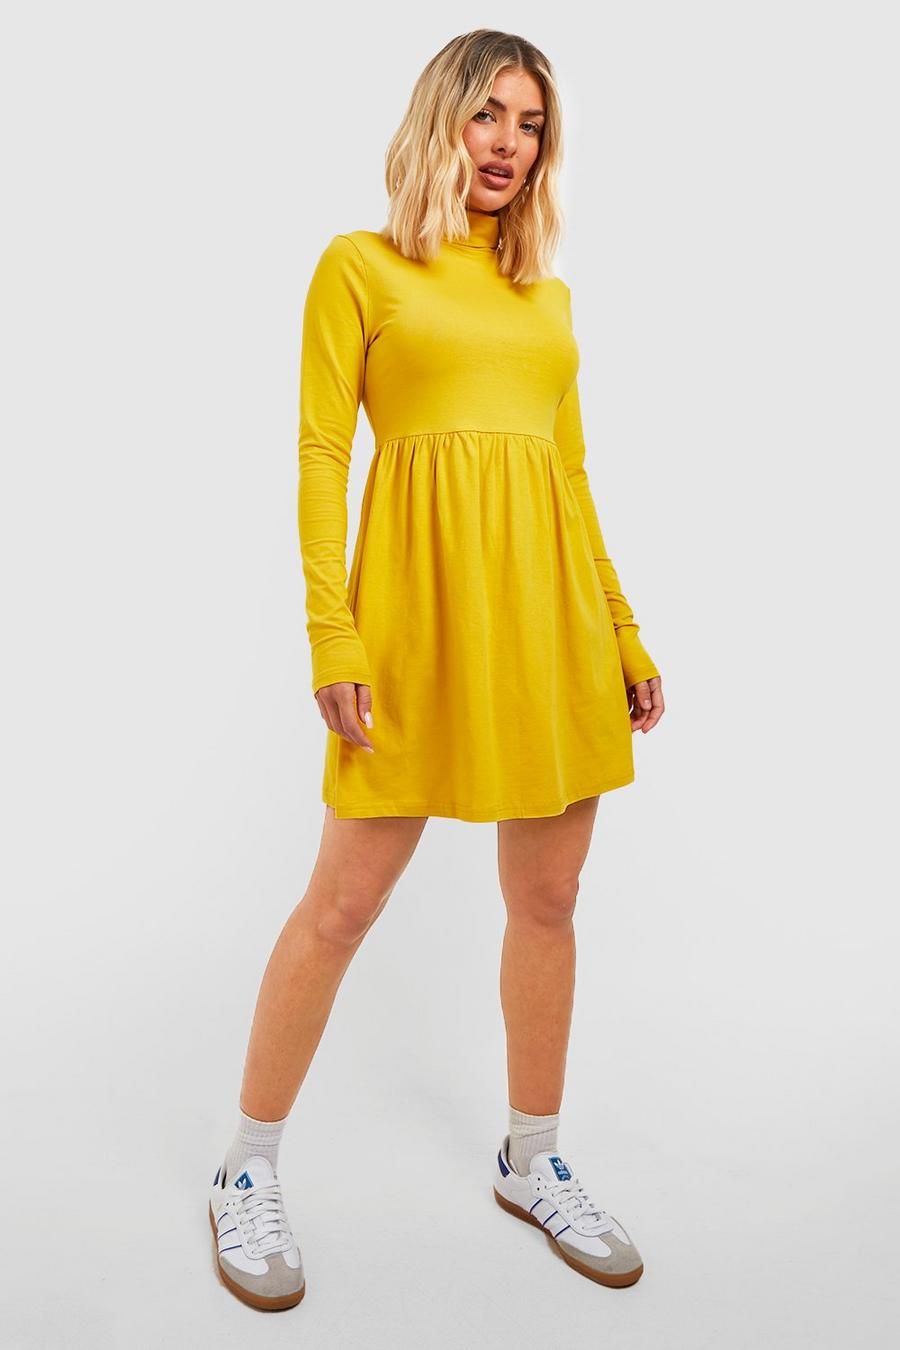 Mustard yellow Turtleneck Long Sleeve Skater Dress